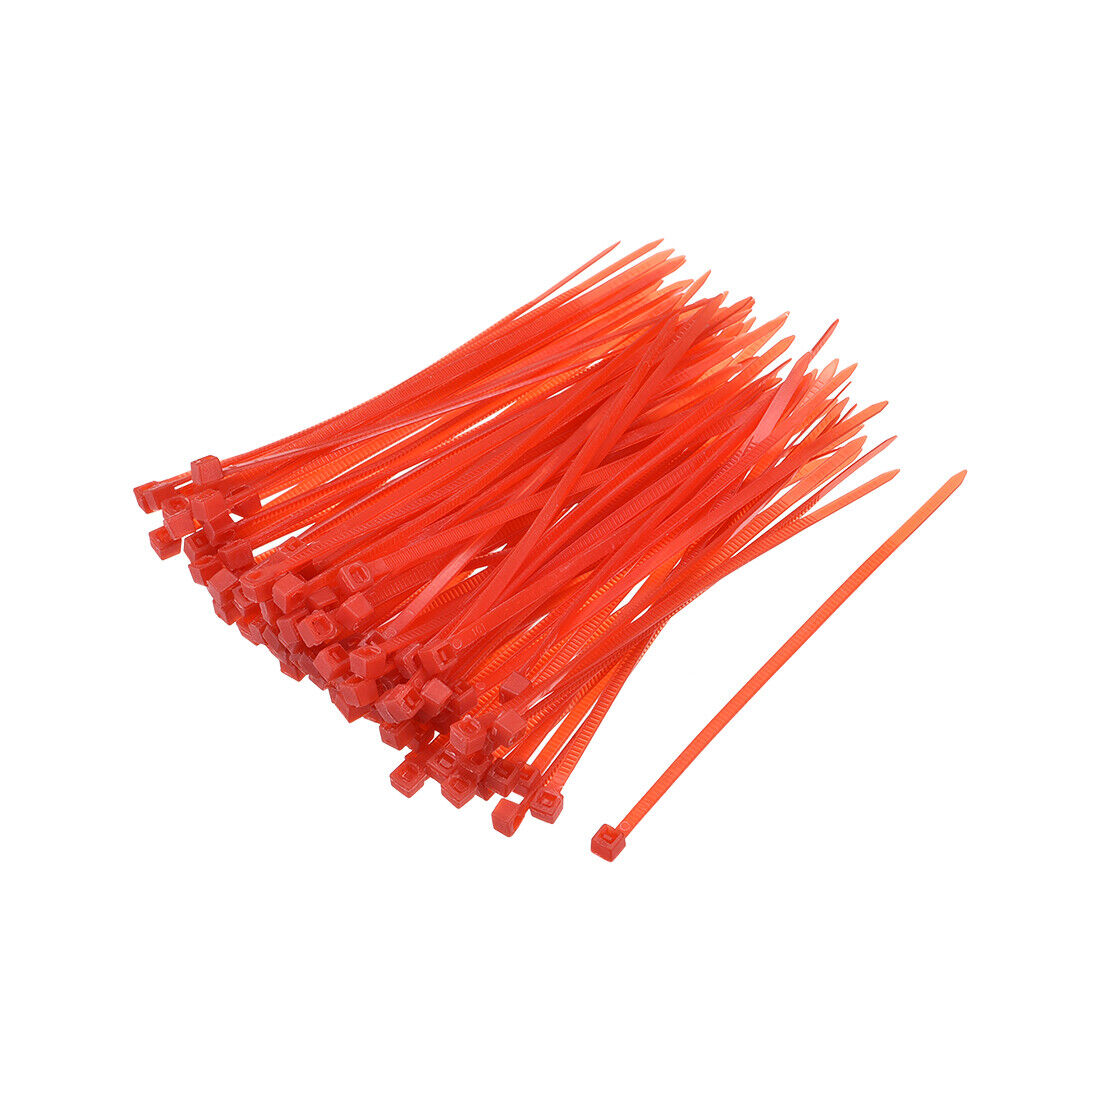 Cable Zip Ties 100mmx1.8mm Self-locking Nylon Tie Wraps Red 1000pcs